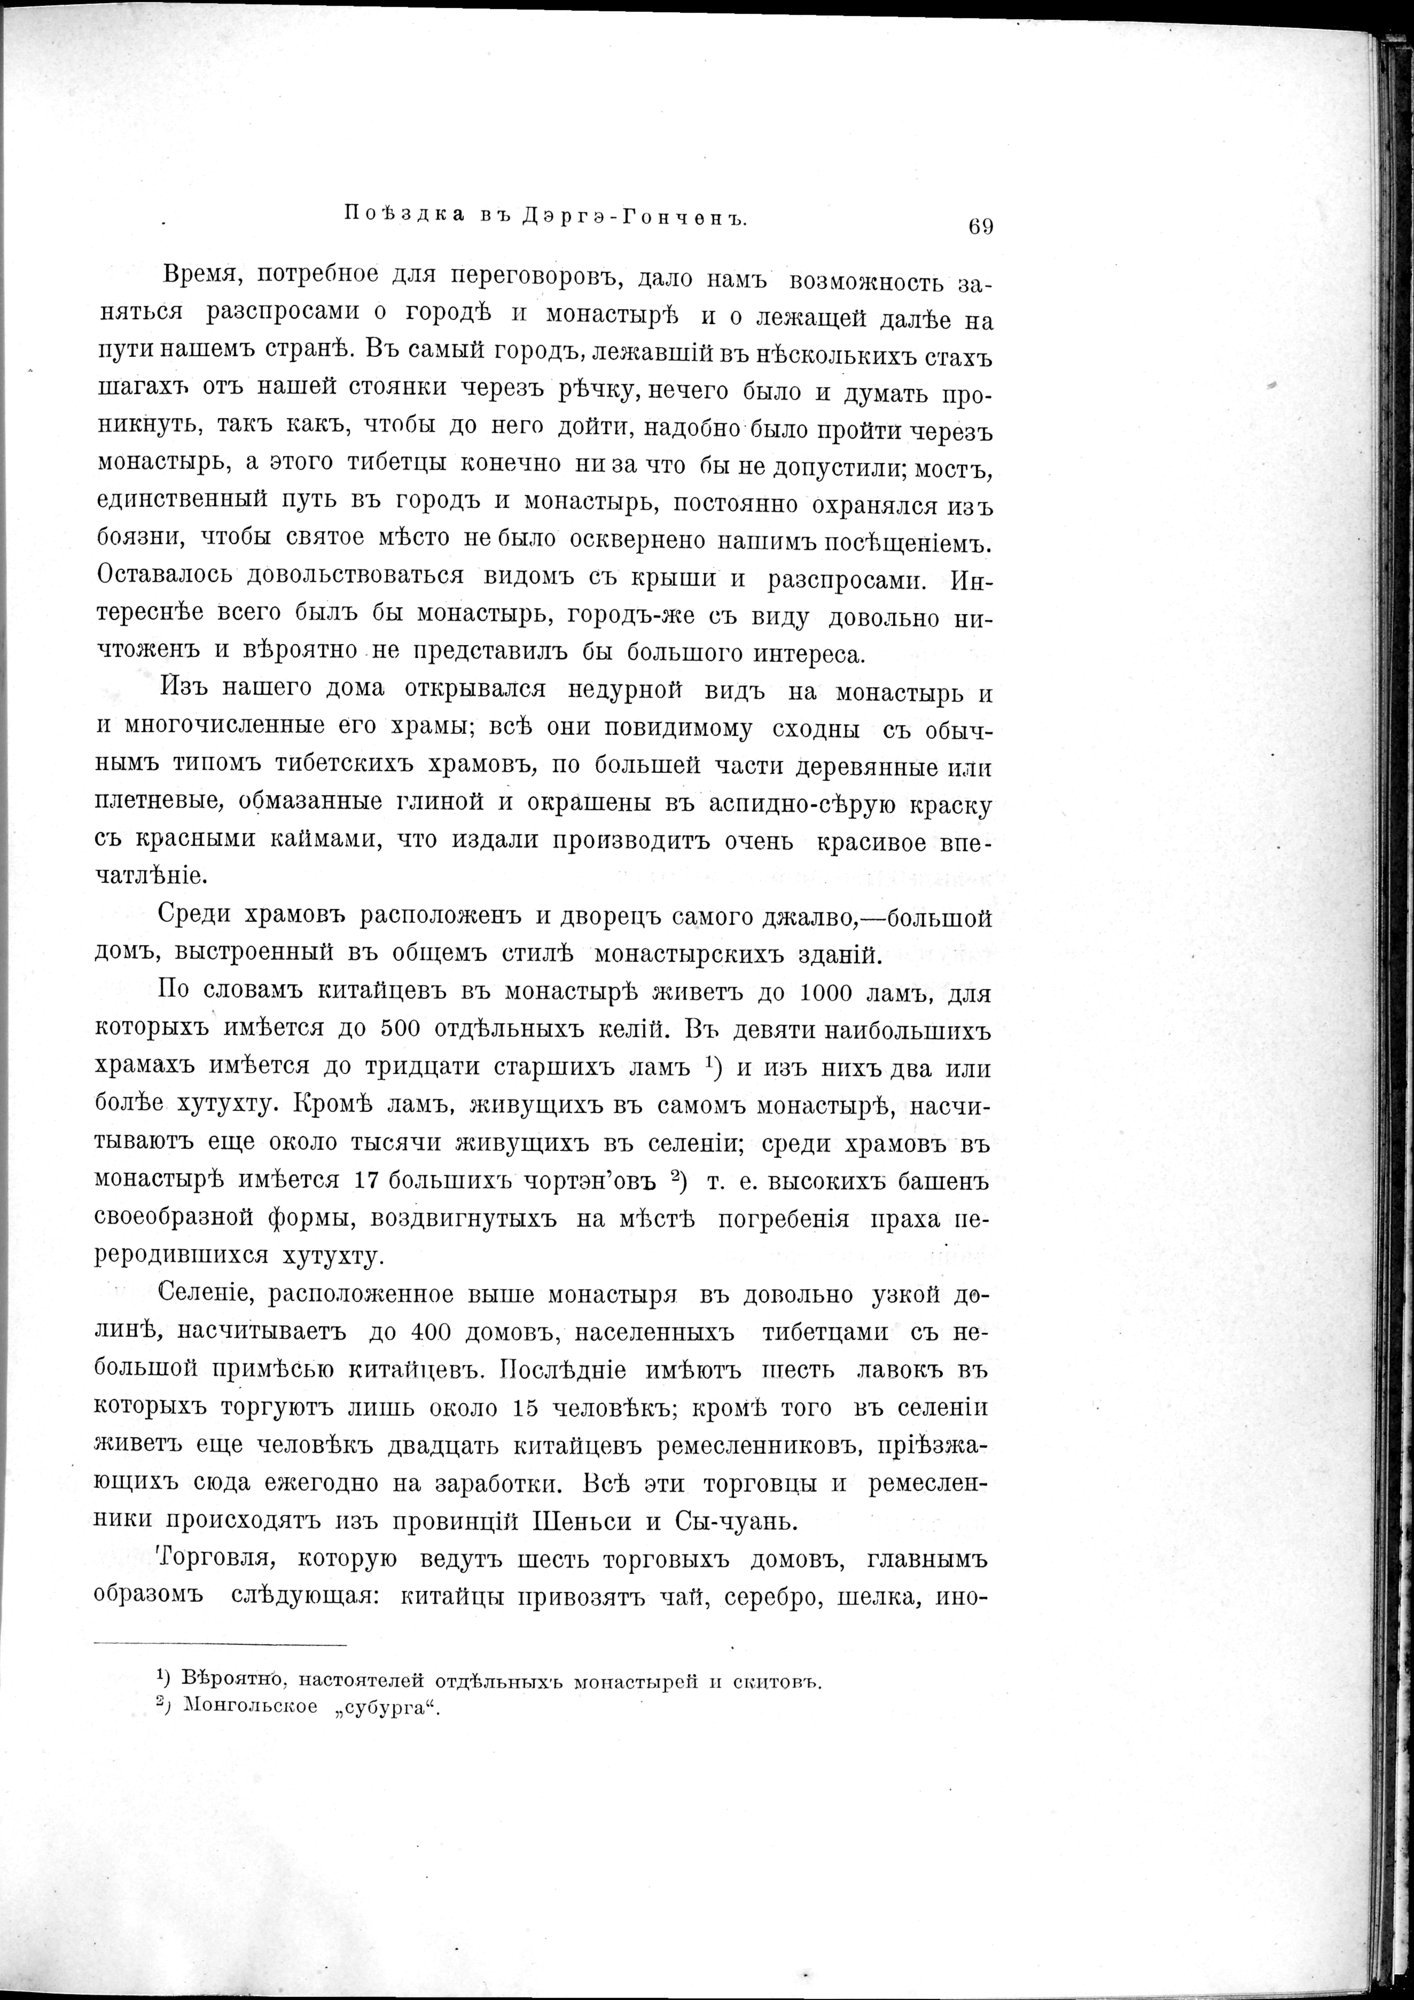 Mongoliia i Kam : vol.3 / Page 97 (Grayscale High Resolution Image)